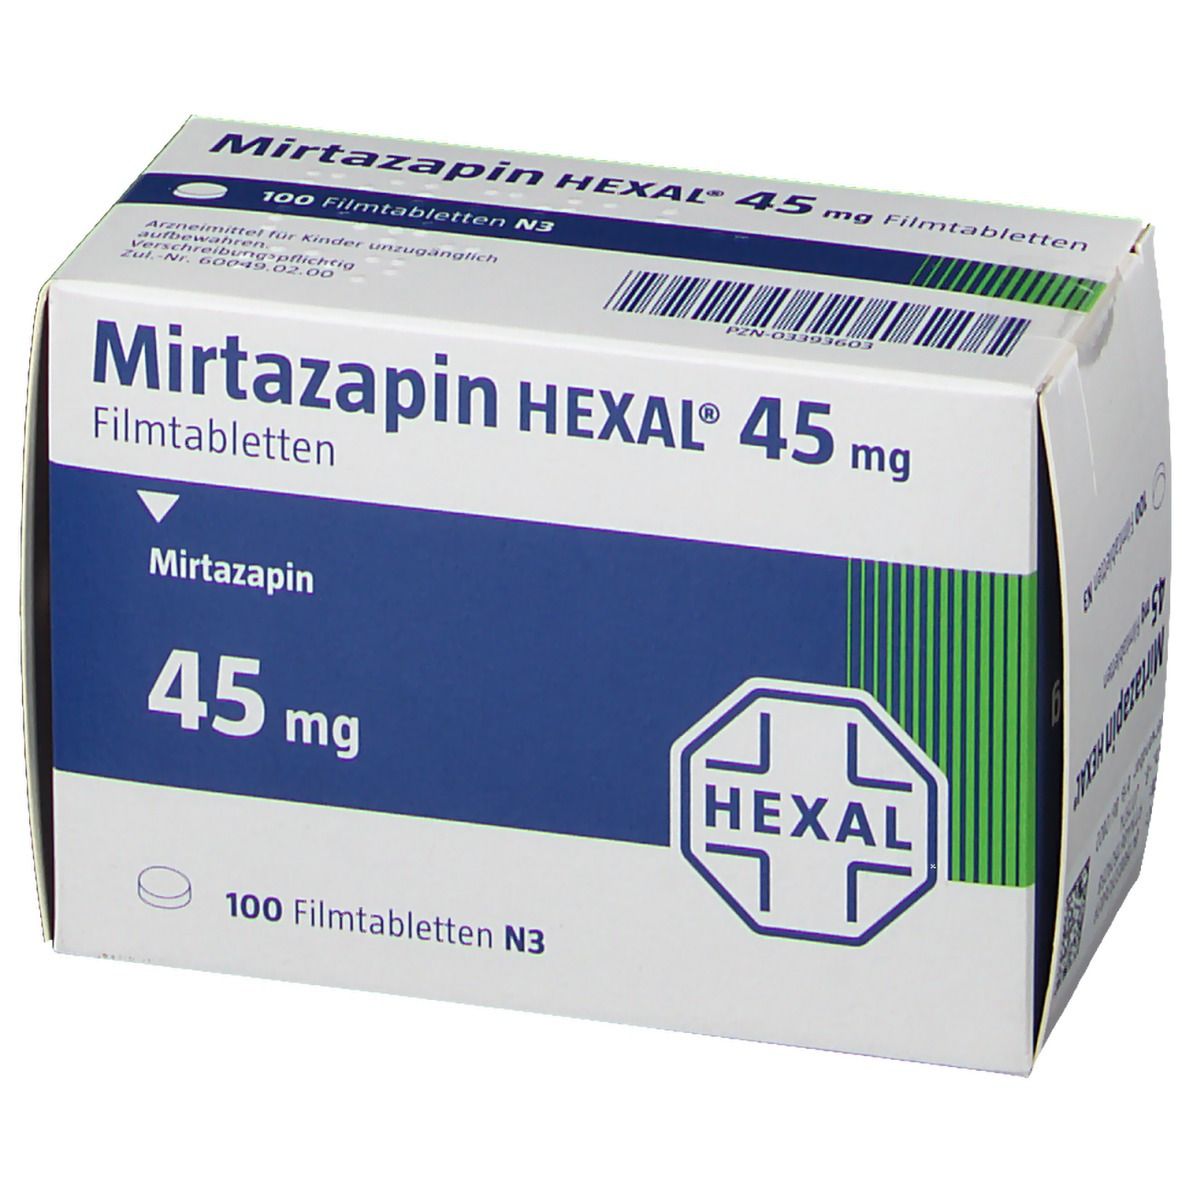 Mirtazapin HEXAL® 45 mg